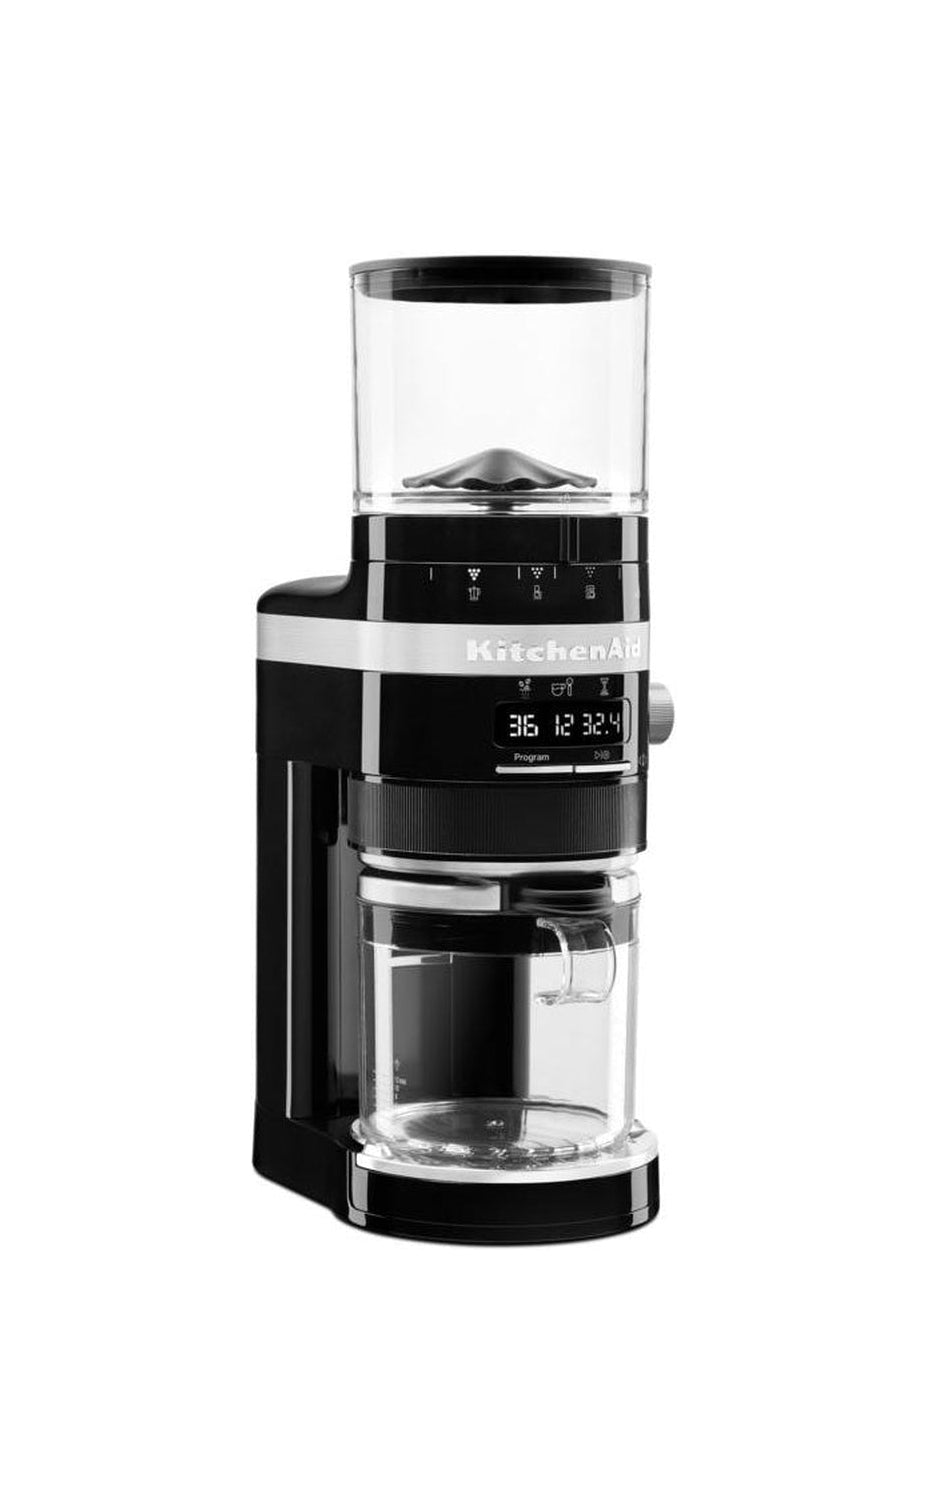 Keukenhulp 5 kcg8433 Artisan Coffee Grinder, Onyx Black